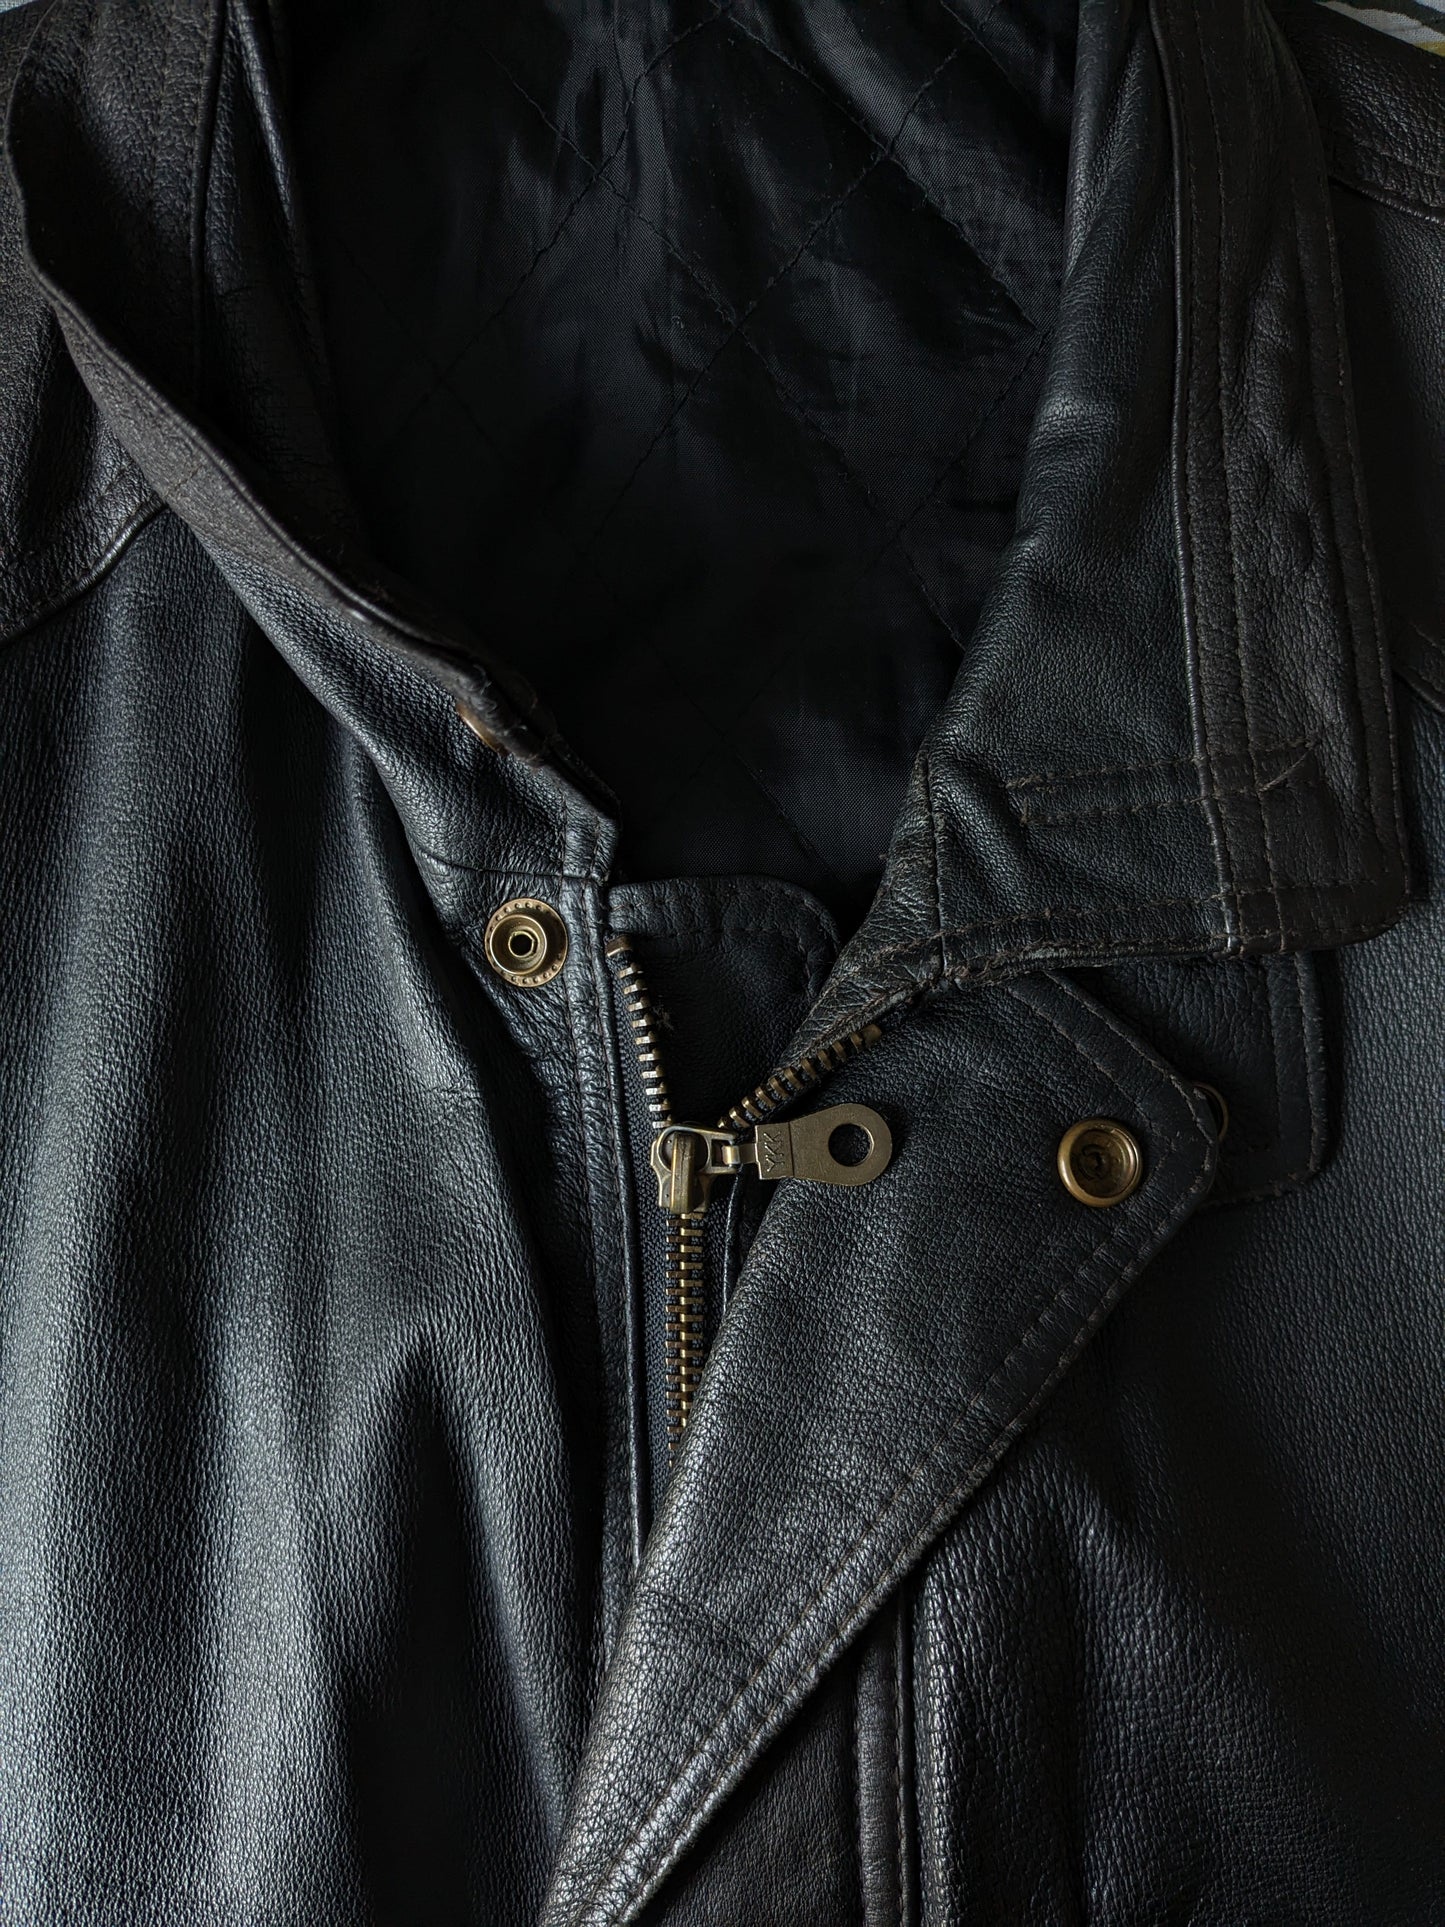 Henry Morrel in pelle vintage Walder / waistcoat con doppia chiusura. Nero. Dimensione XL / XXL.